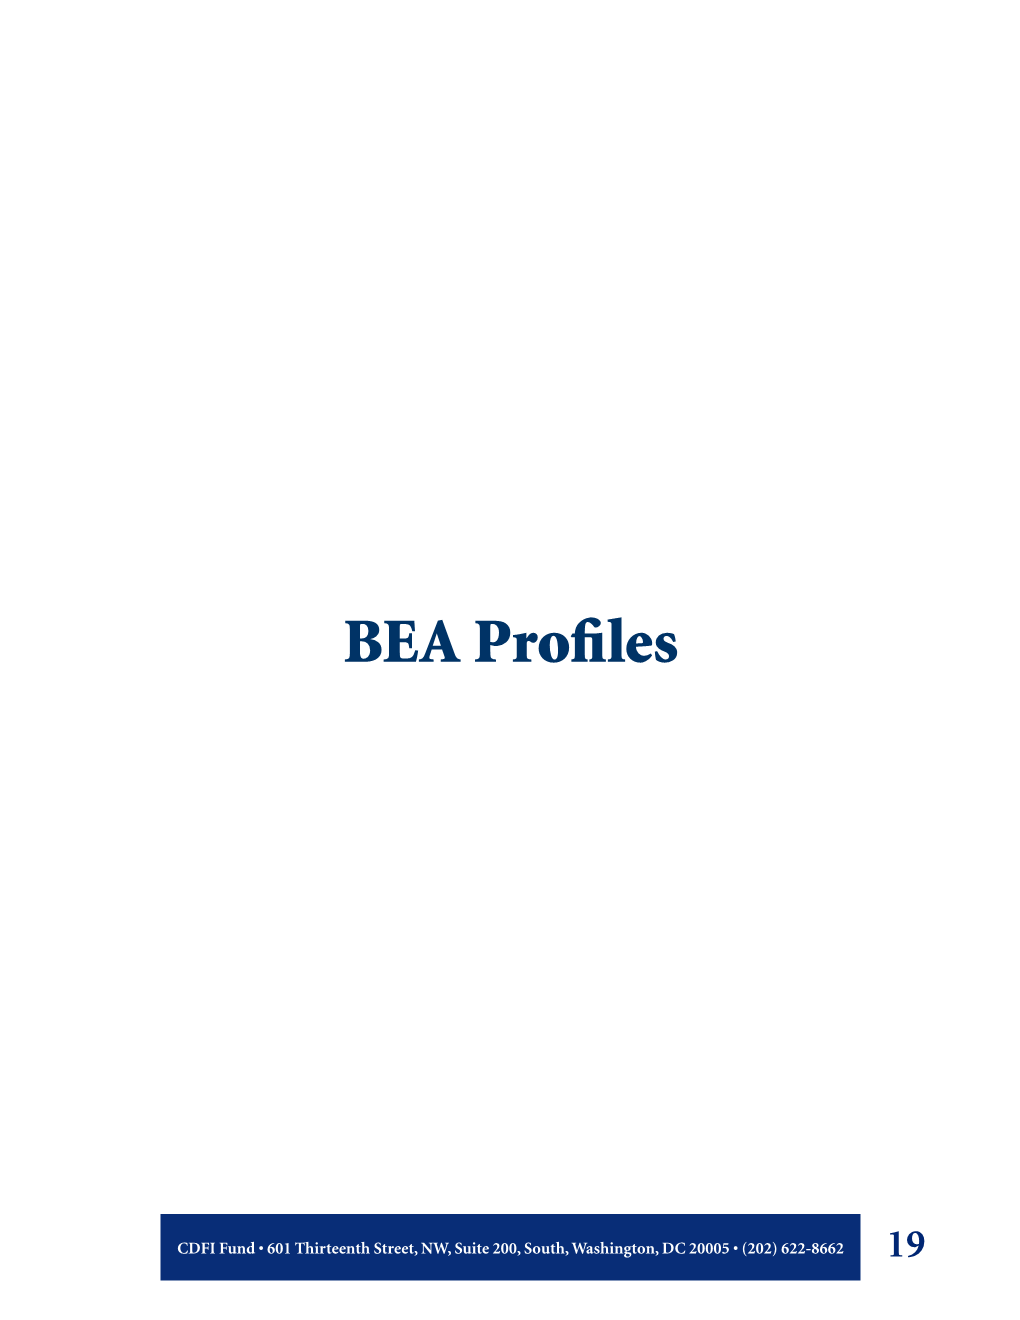 2009 BEA Profiles of Awardees